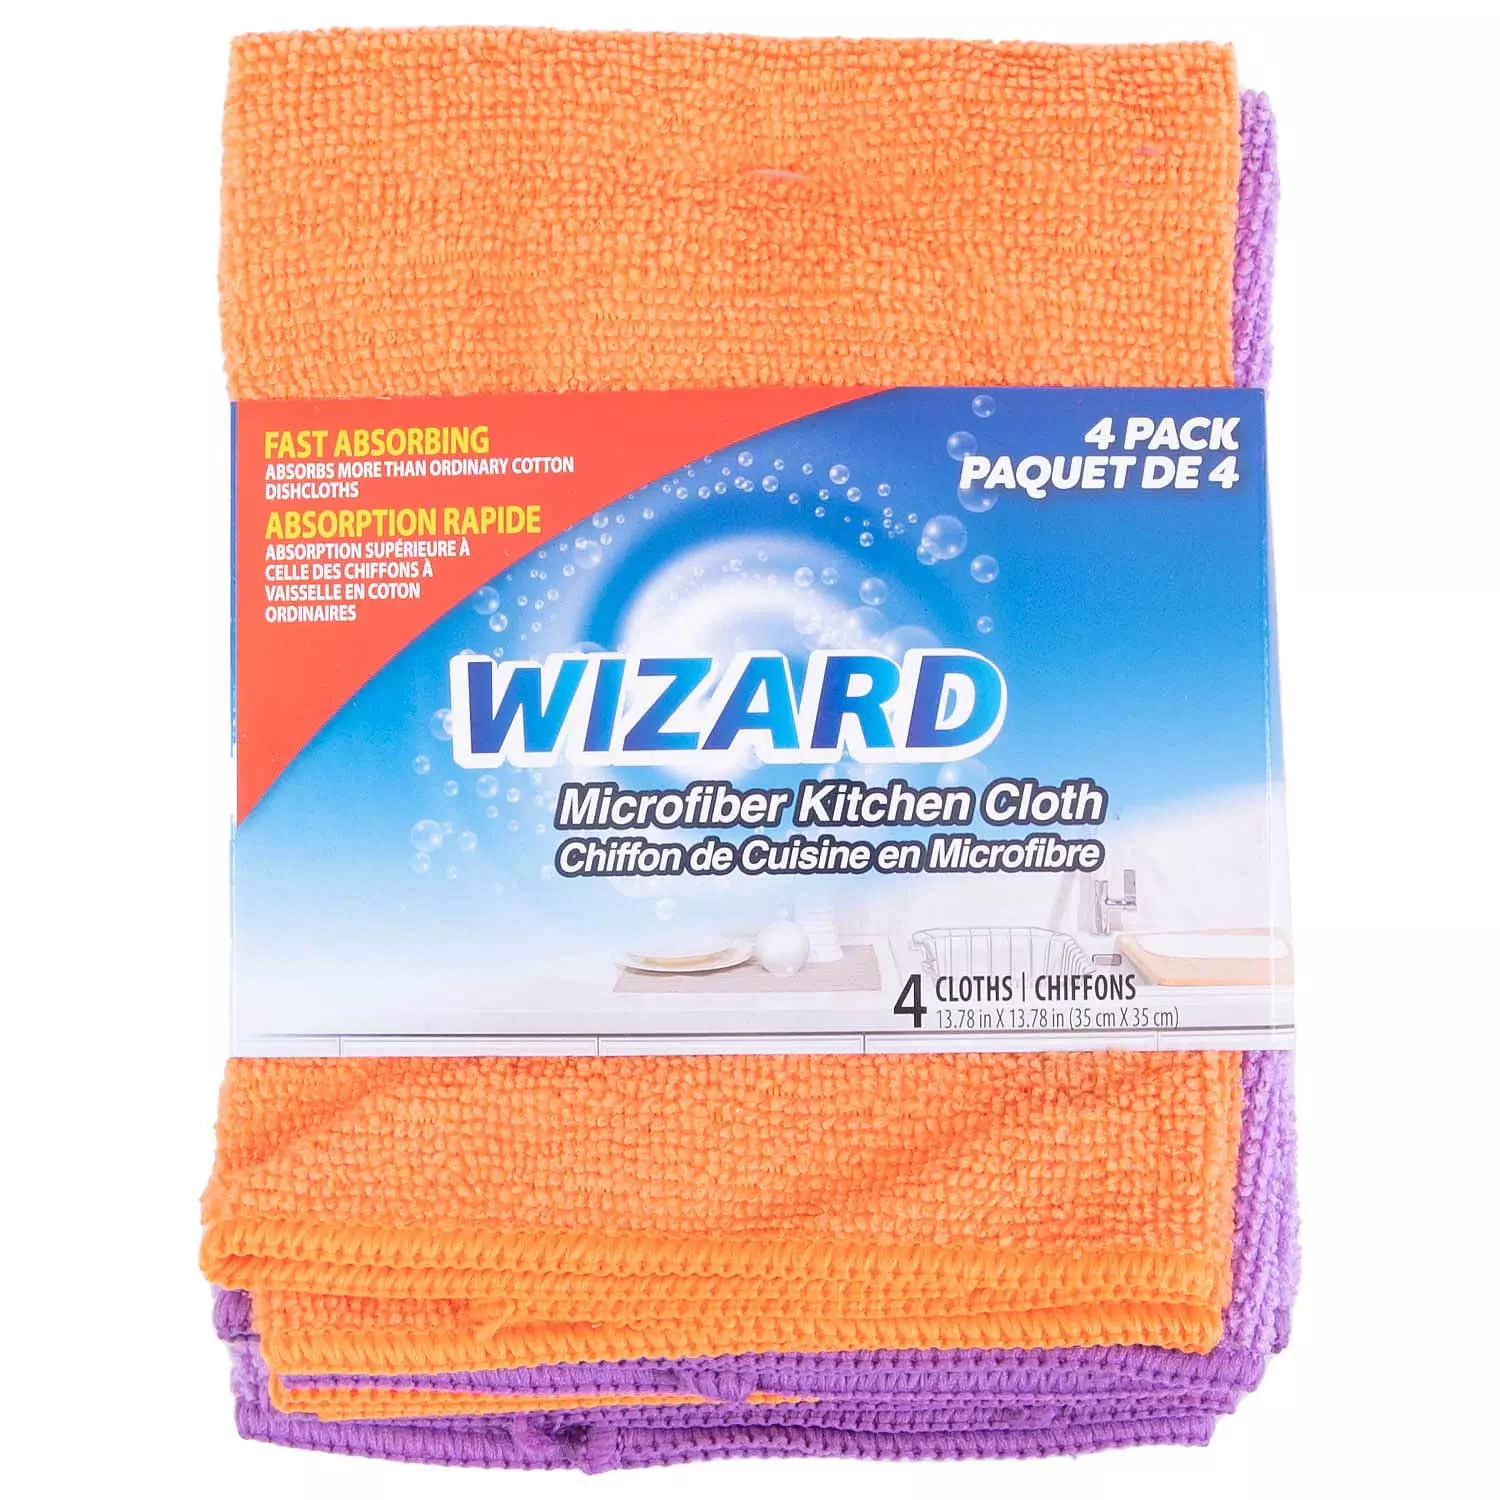 Wizard - Microfiber kitchen cloths, pk. of 4, orange & purple